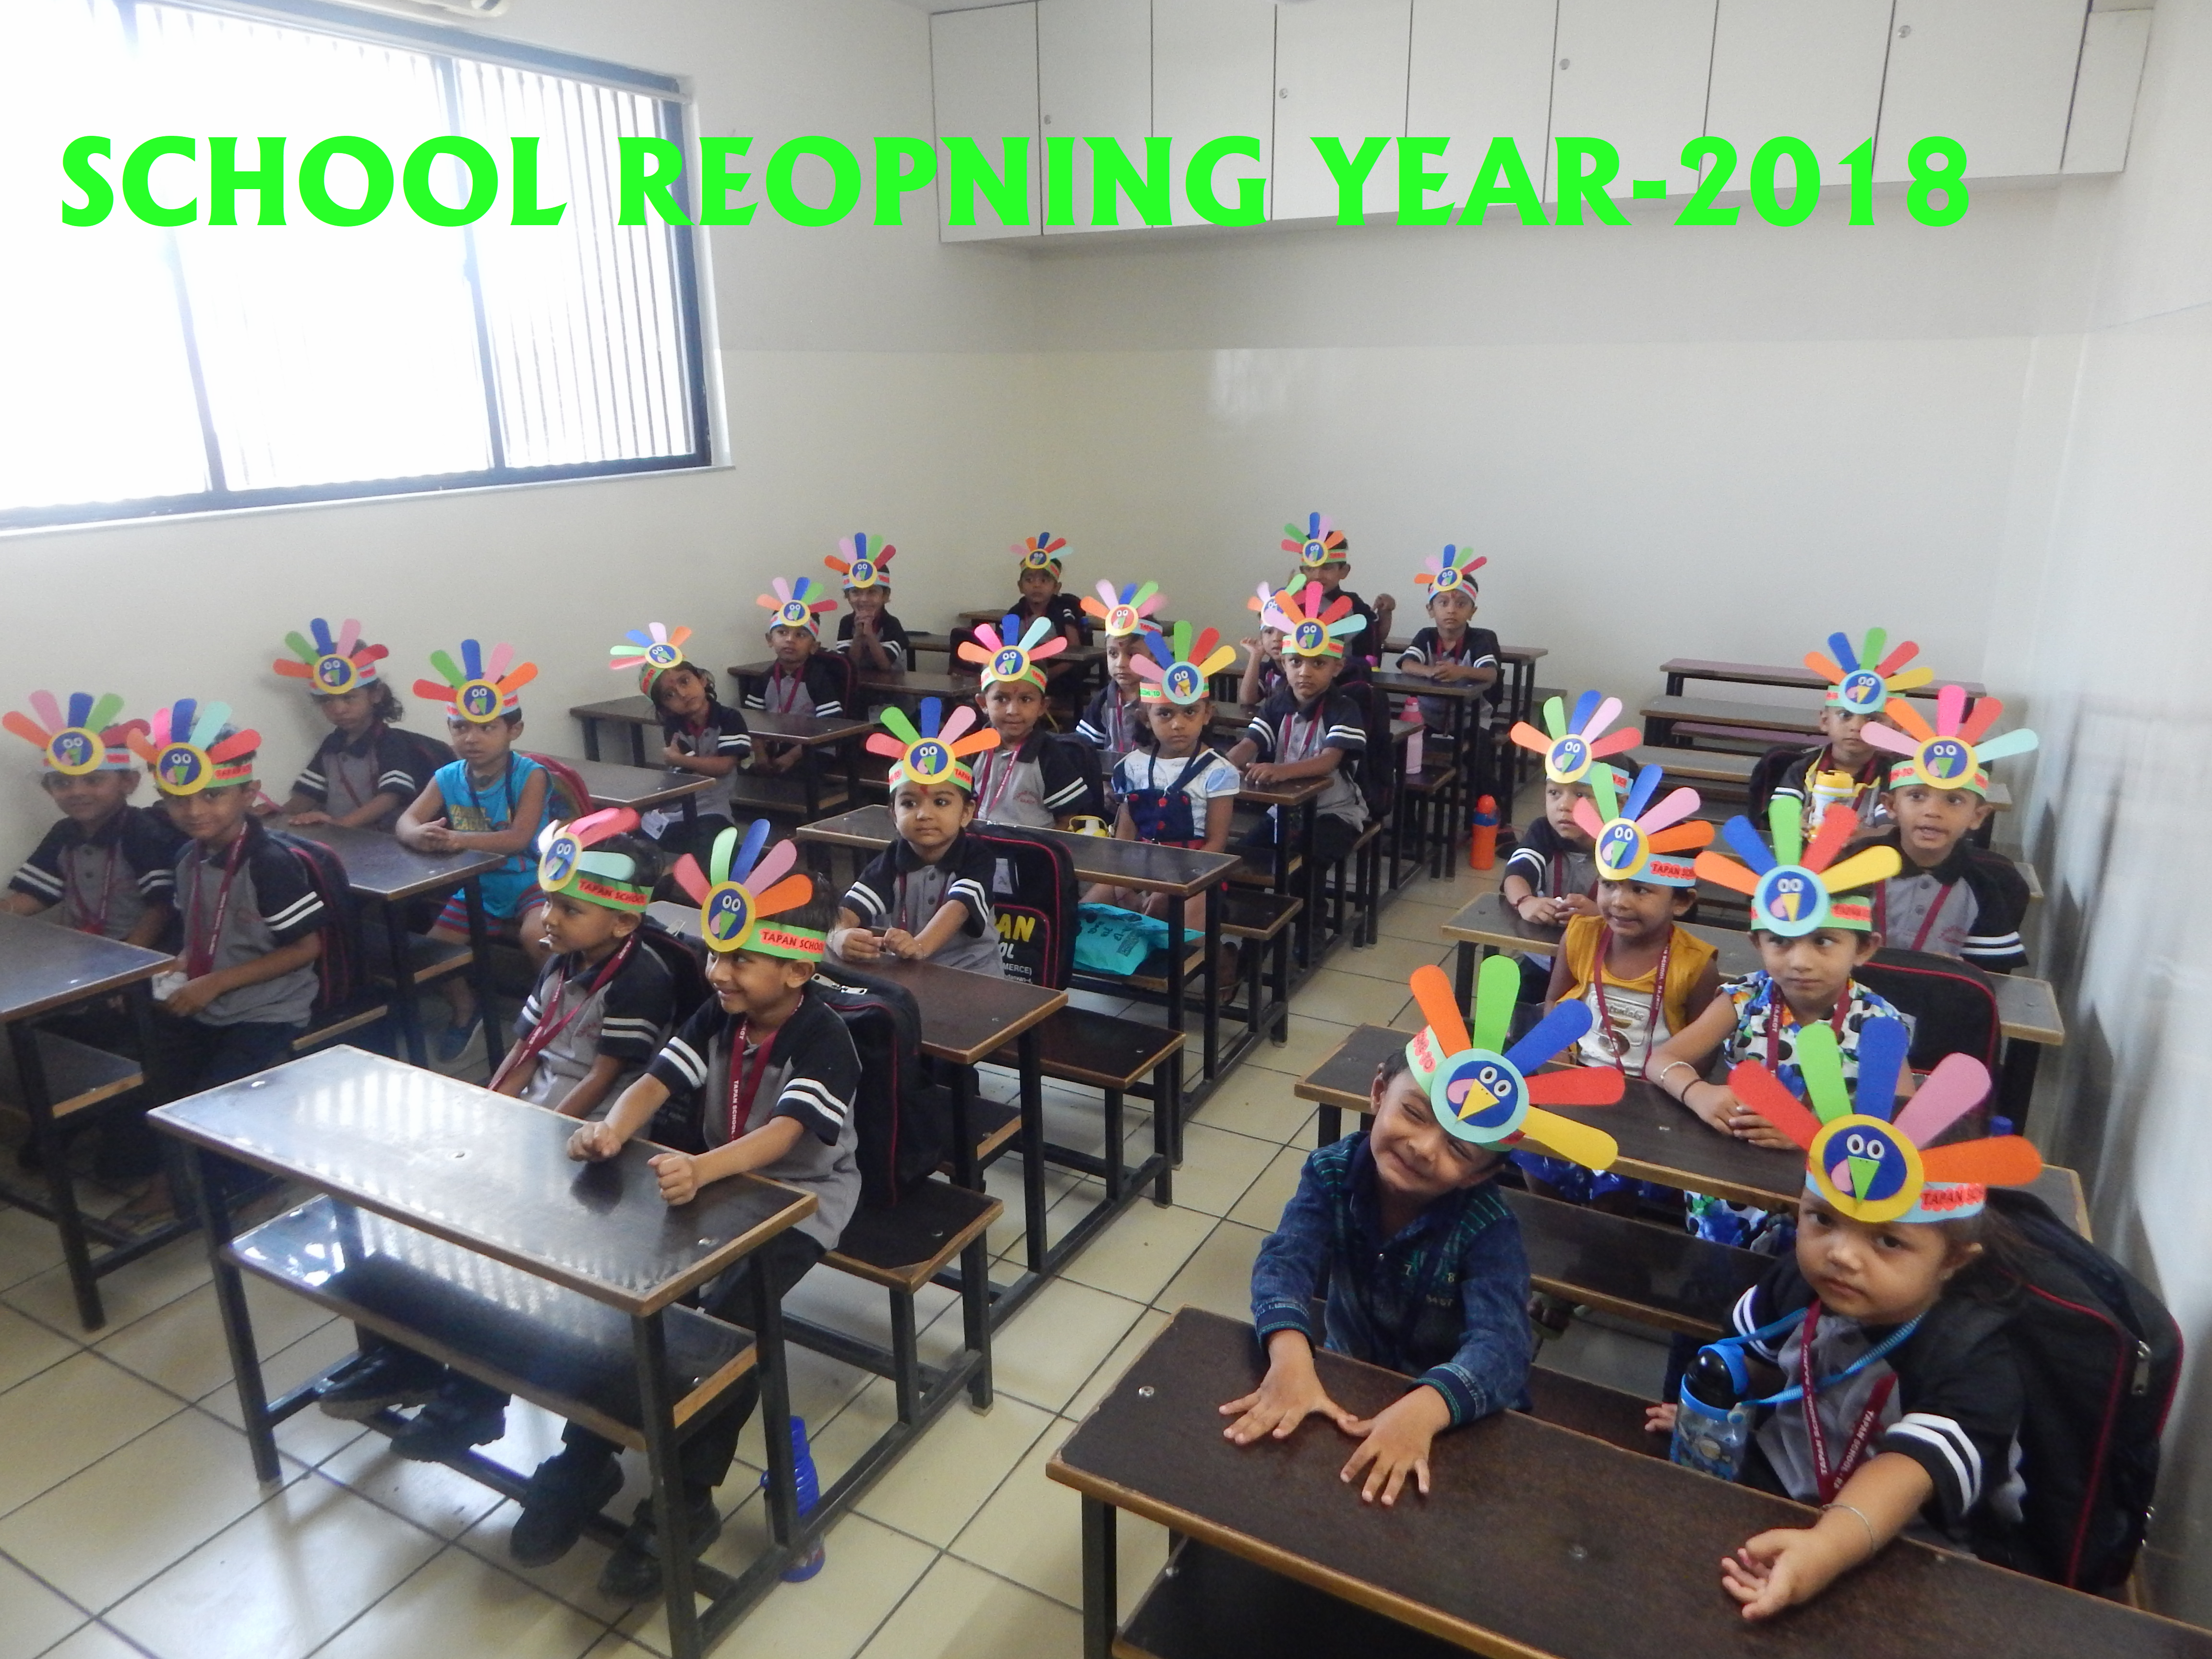 SCHOOL REOPENING YEAR - 2018